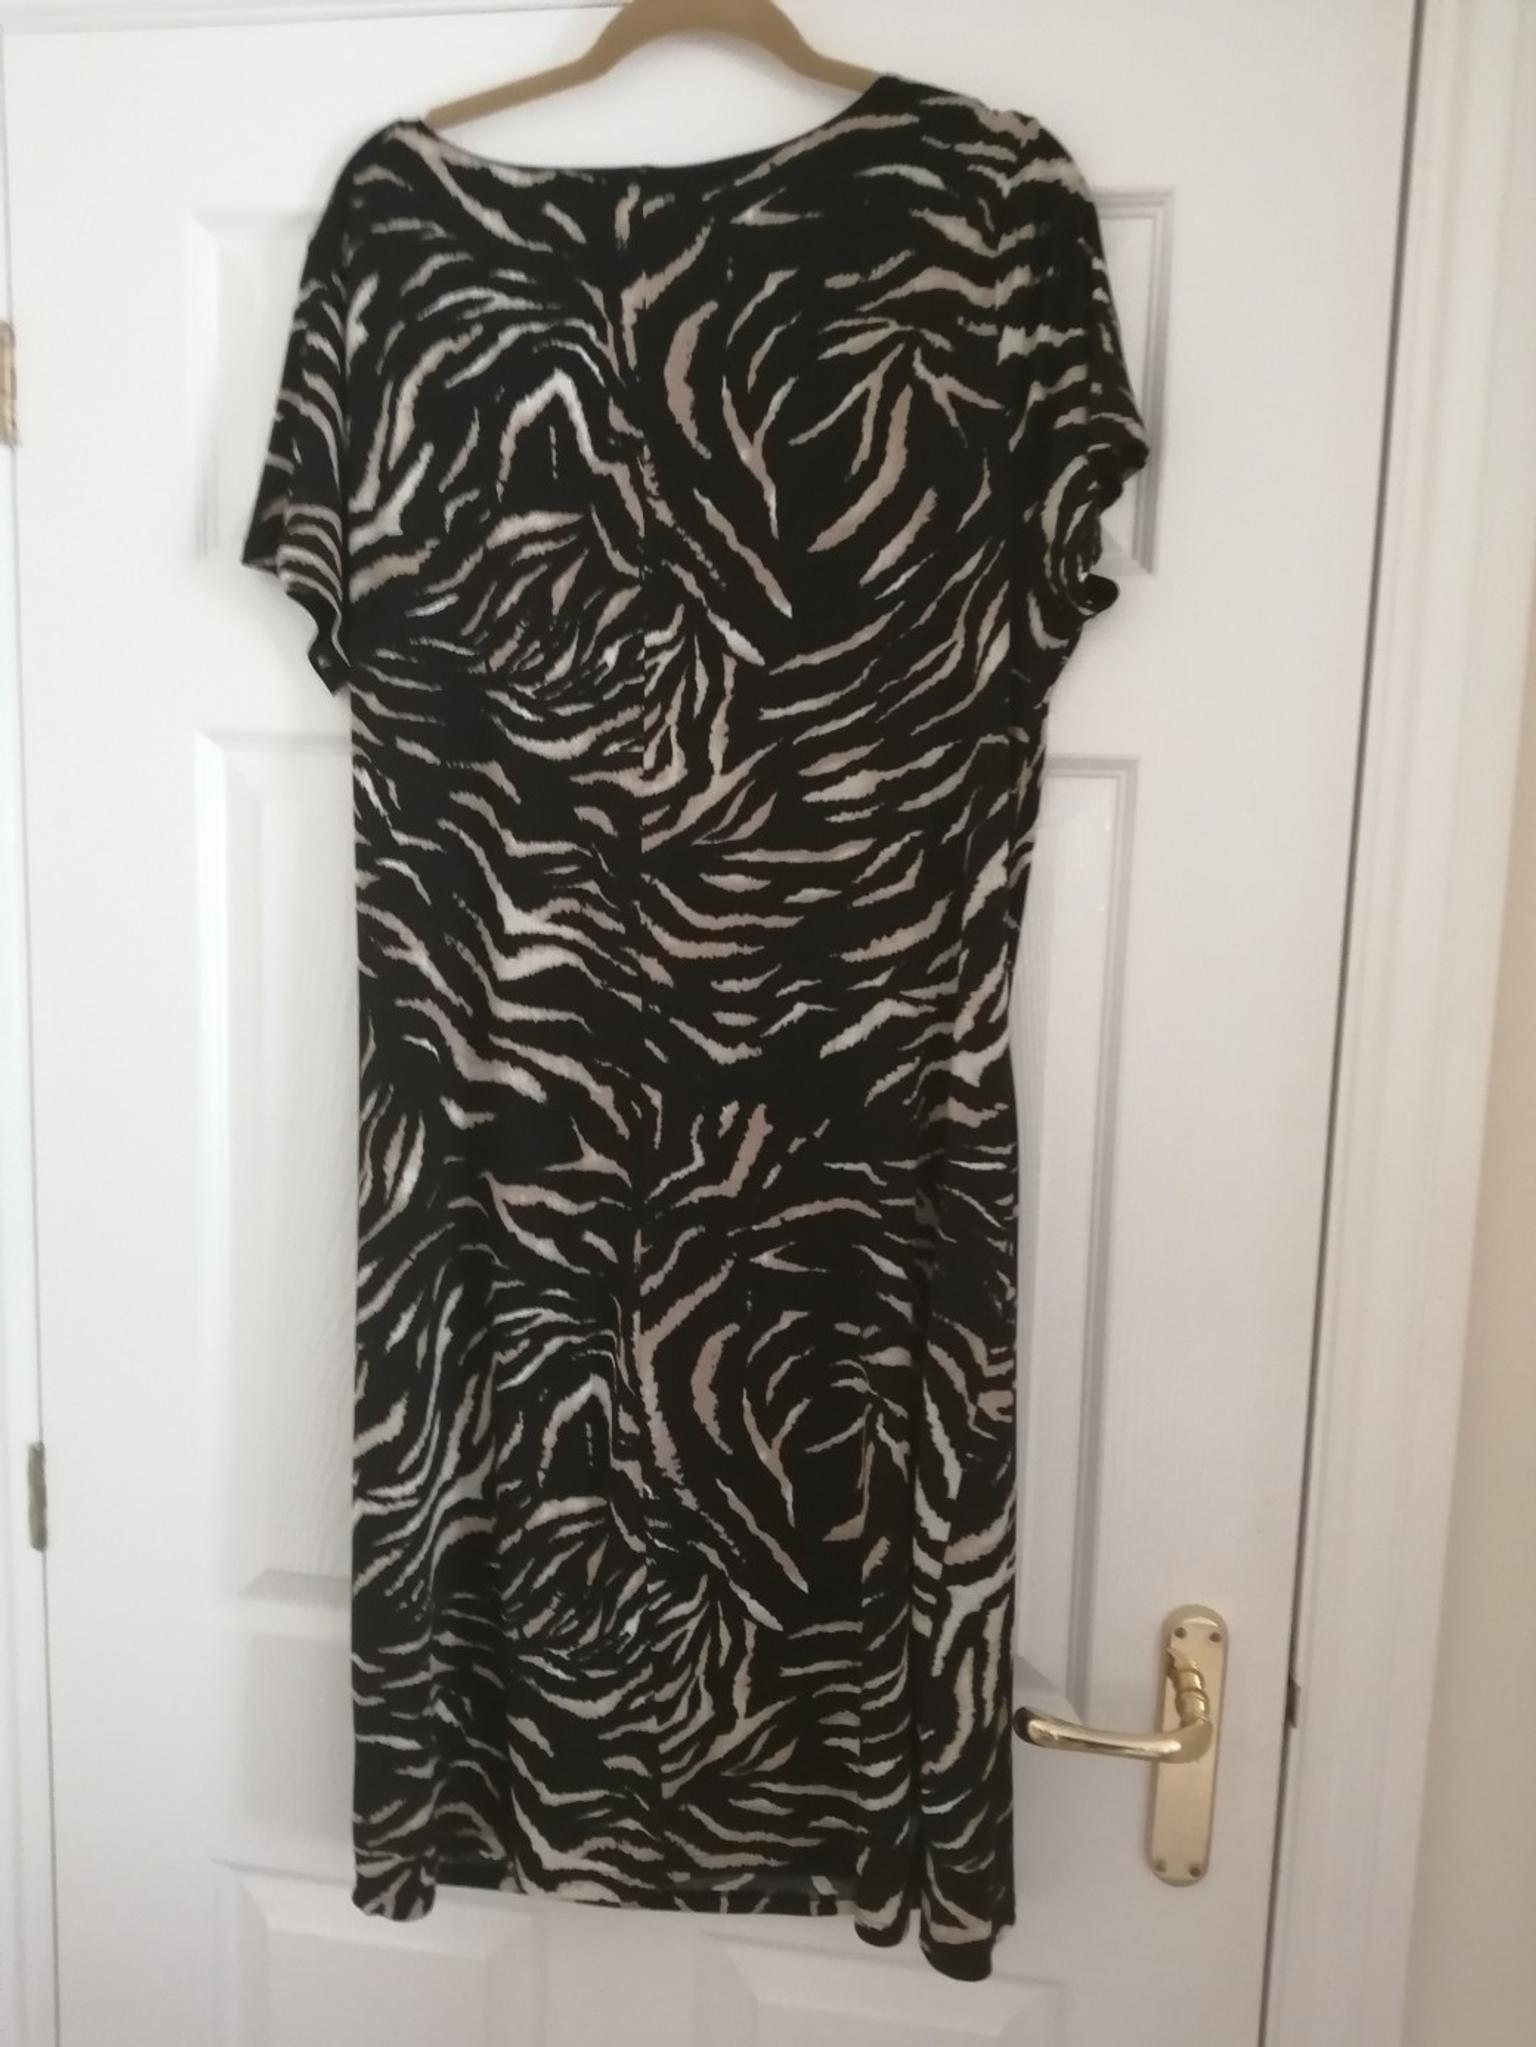 size 22 leopard print dress